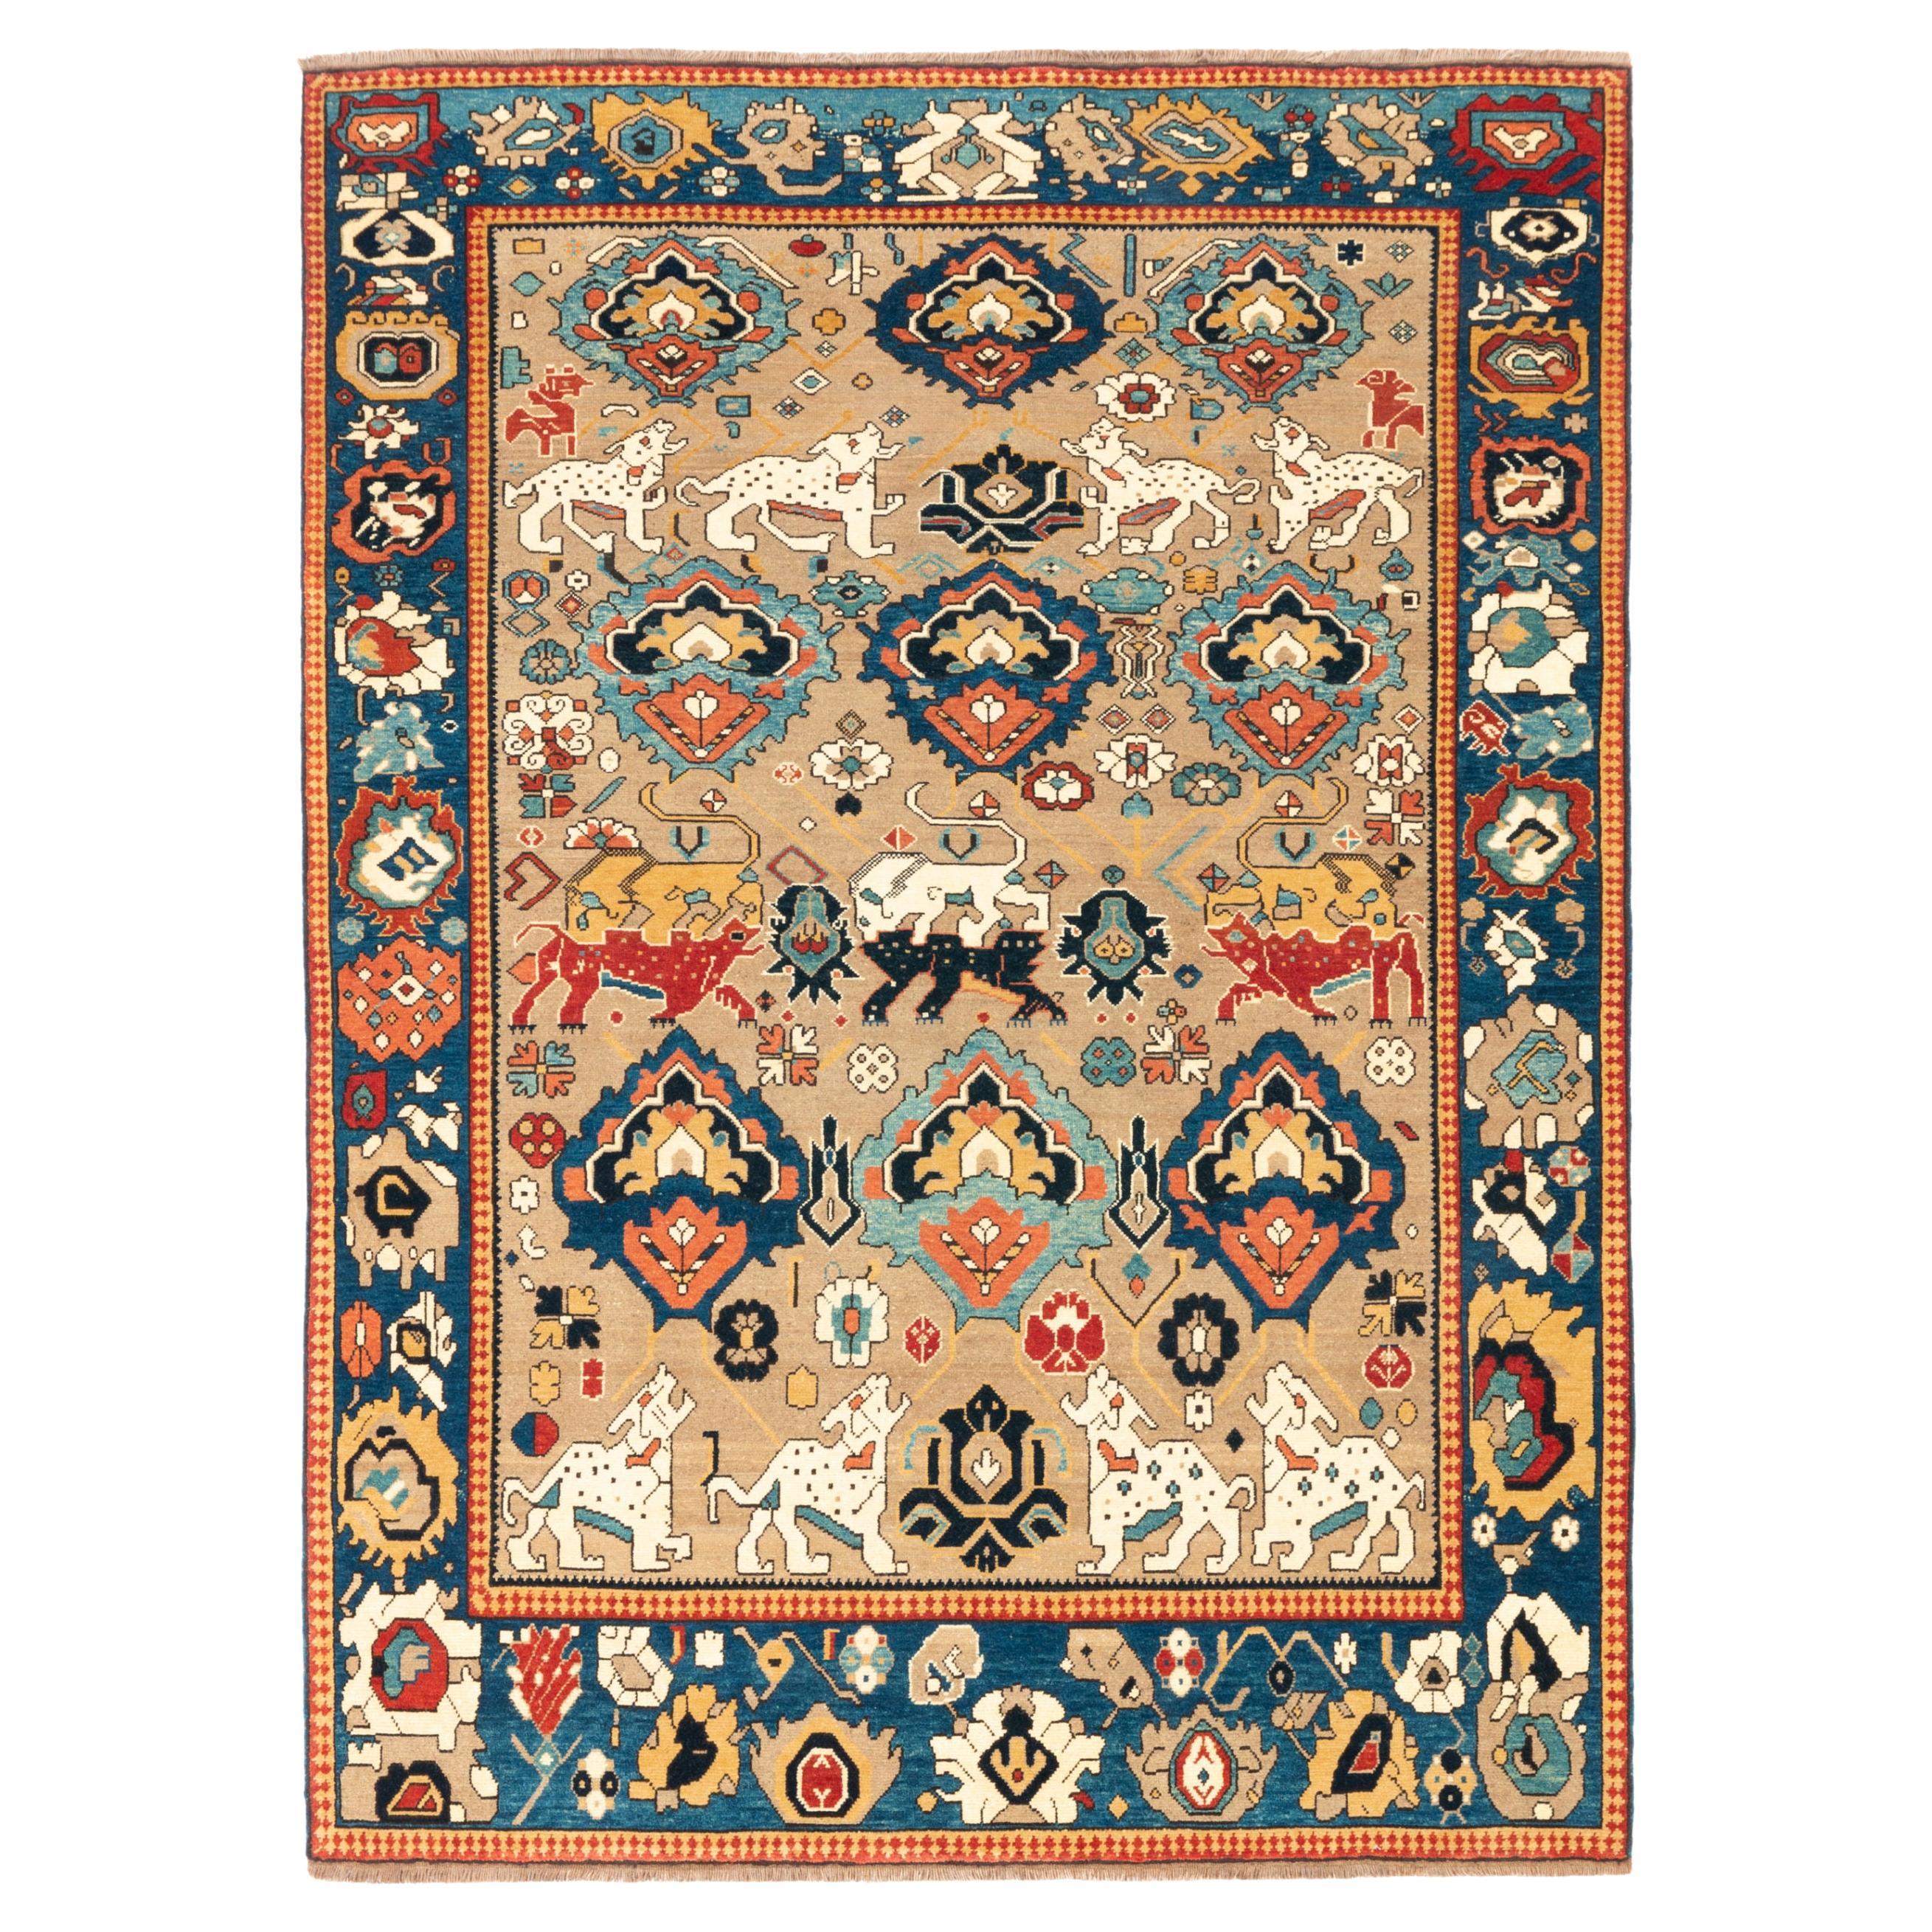 Ararat Rugs Animal Carpet in a Safavid Design Rug Persian Revival, Natural Dyed For Sale